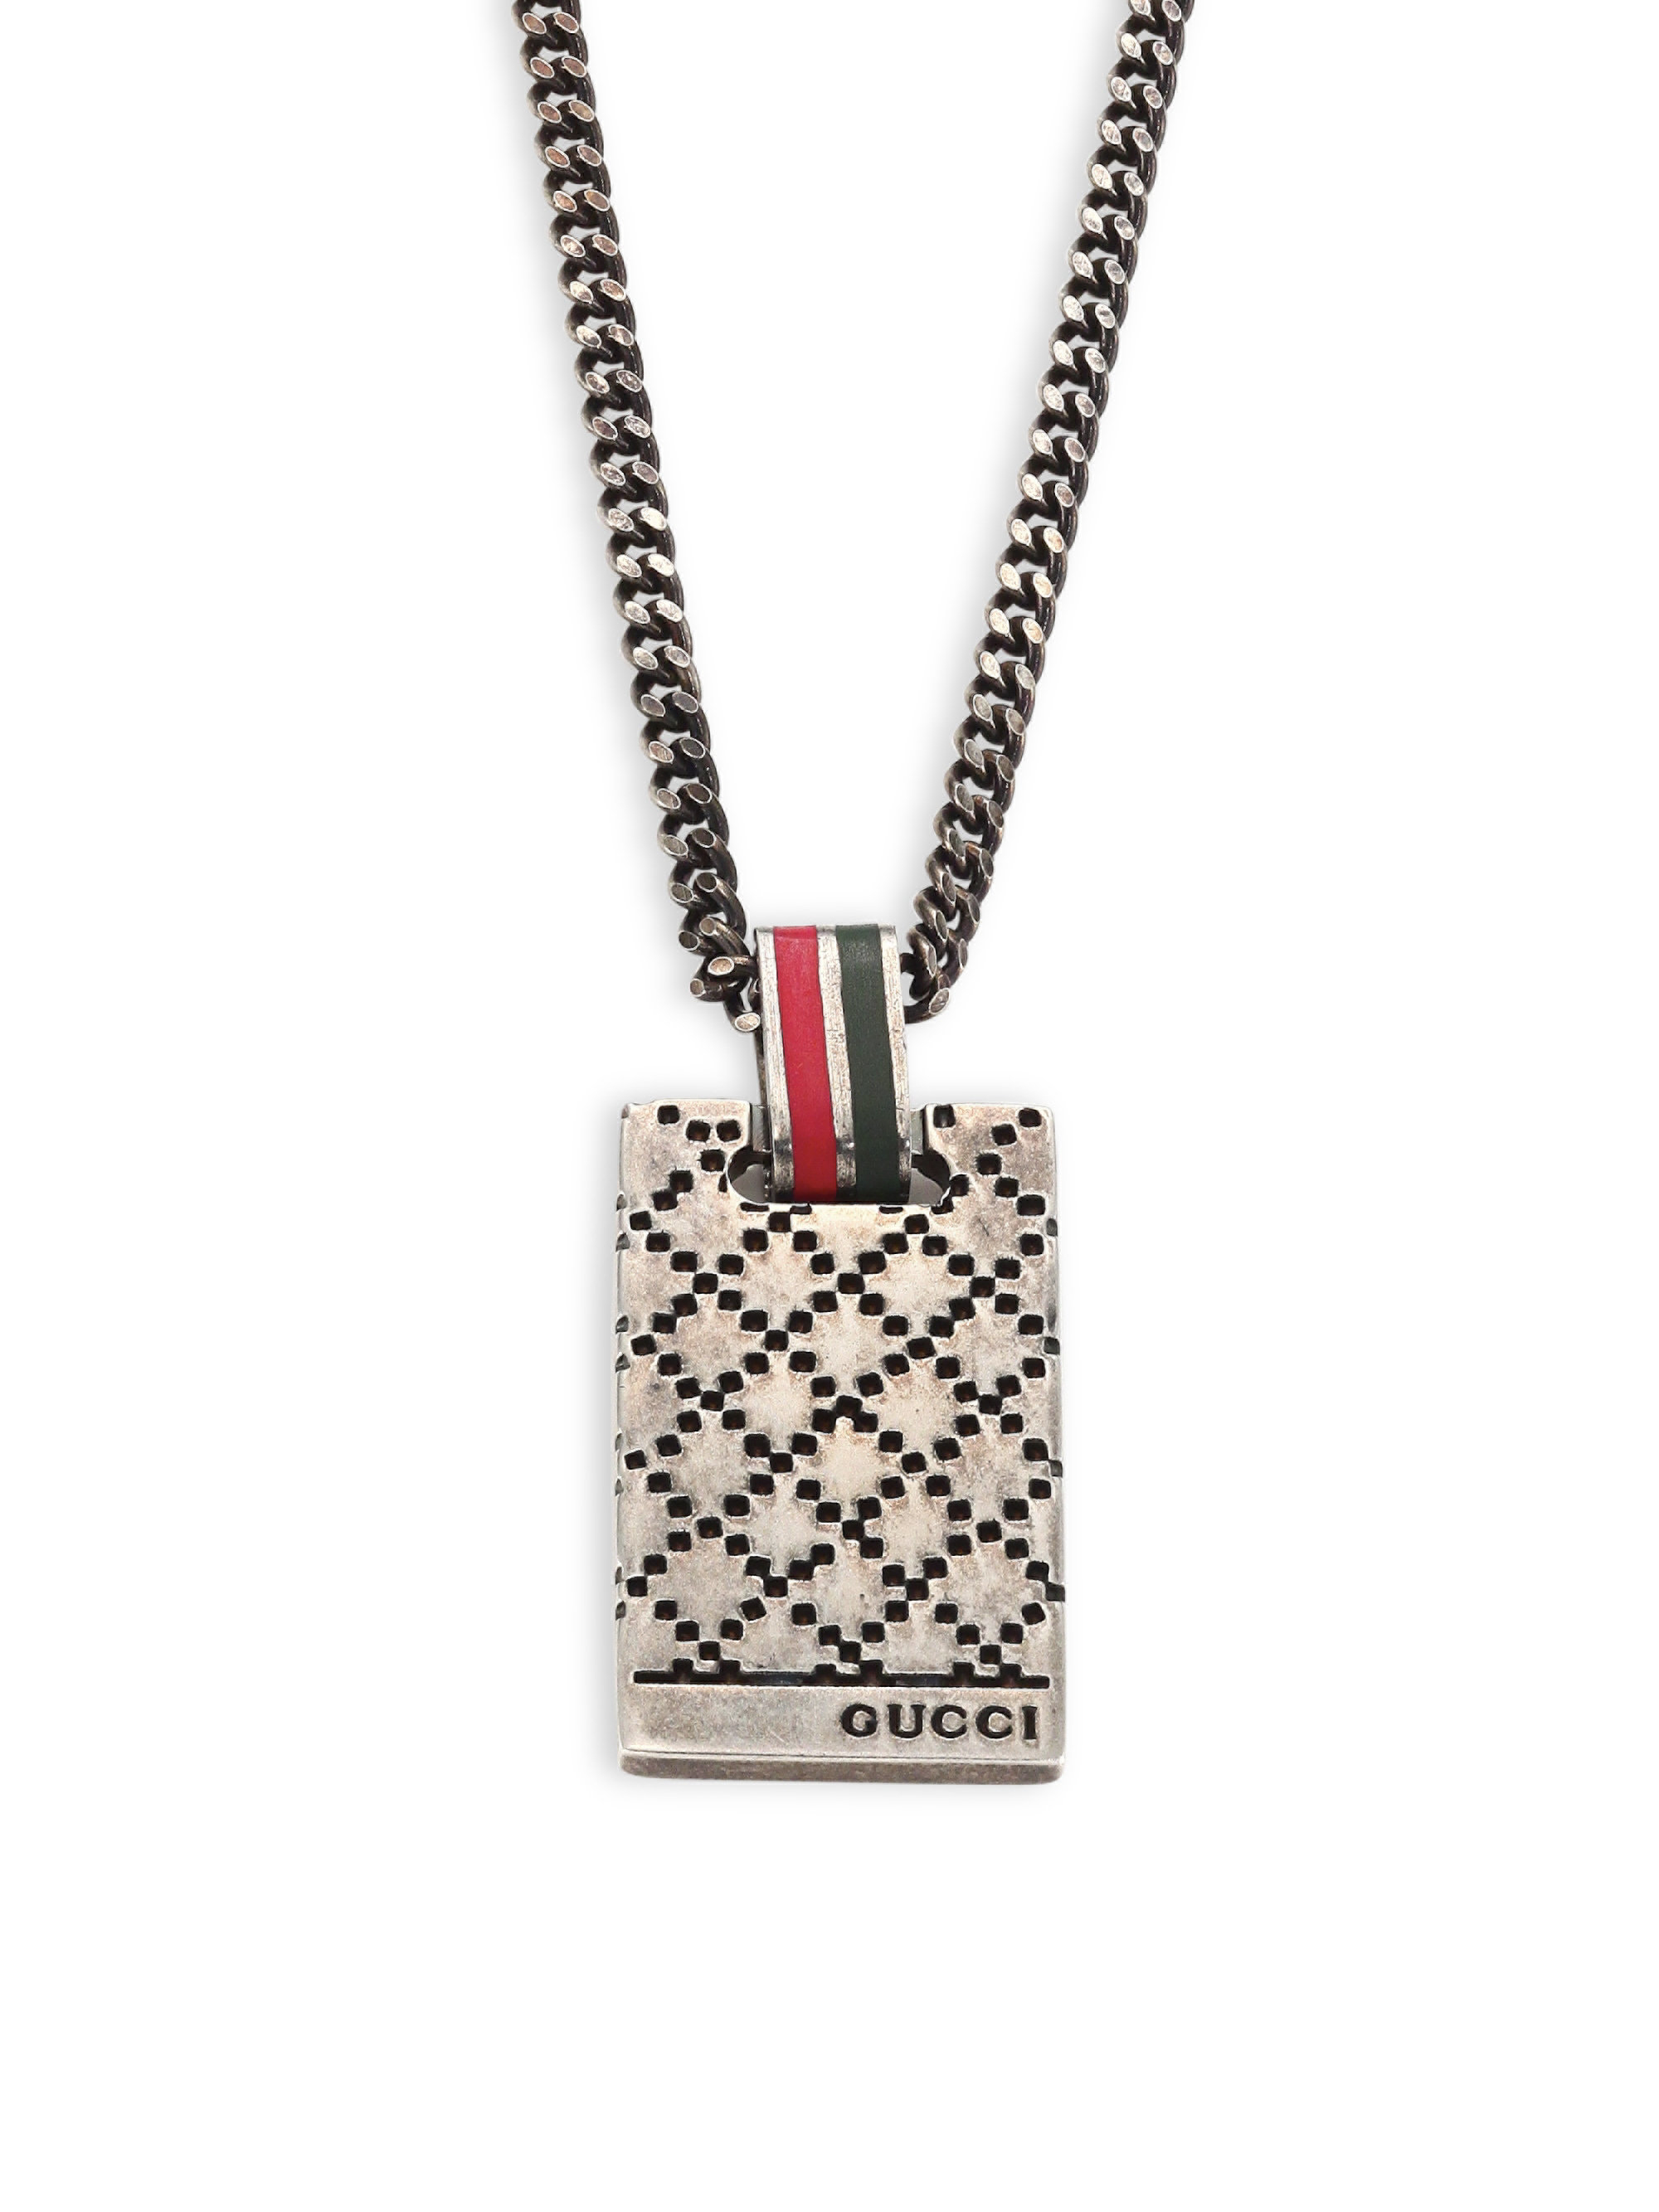 Lyst - Gucci Dtissima Silver Pendant Necklace in Metallic for Men